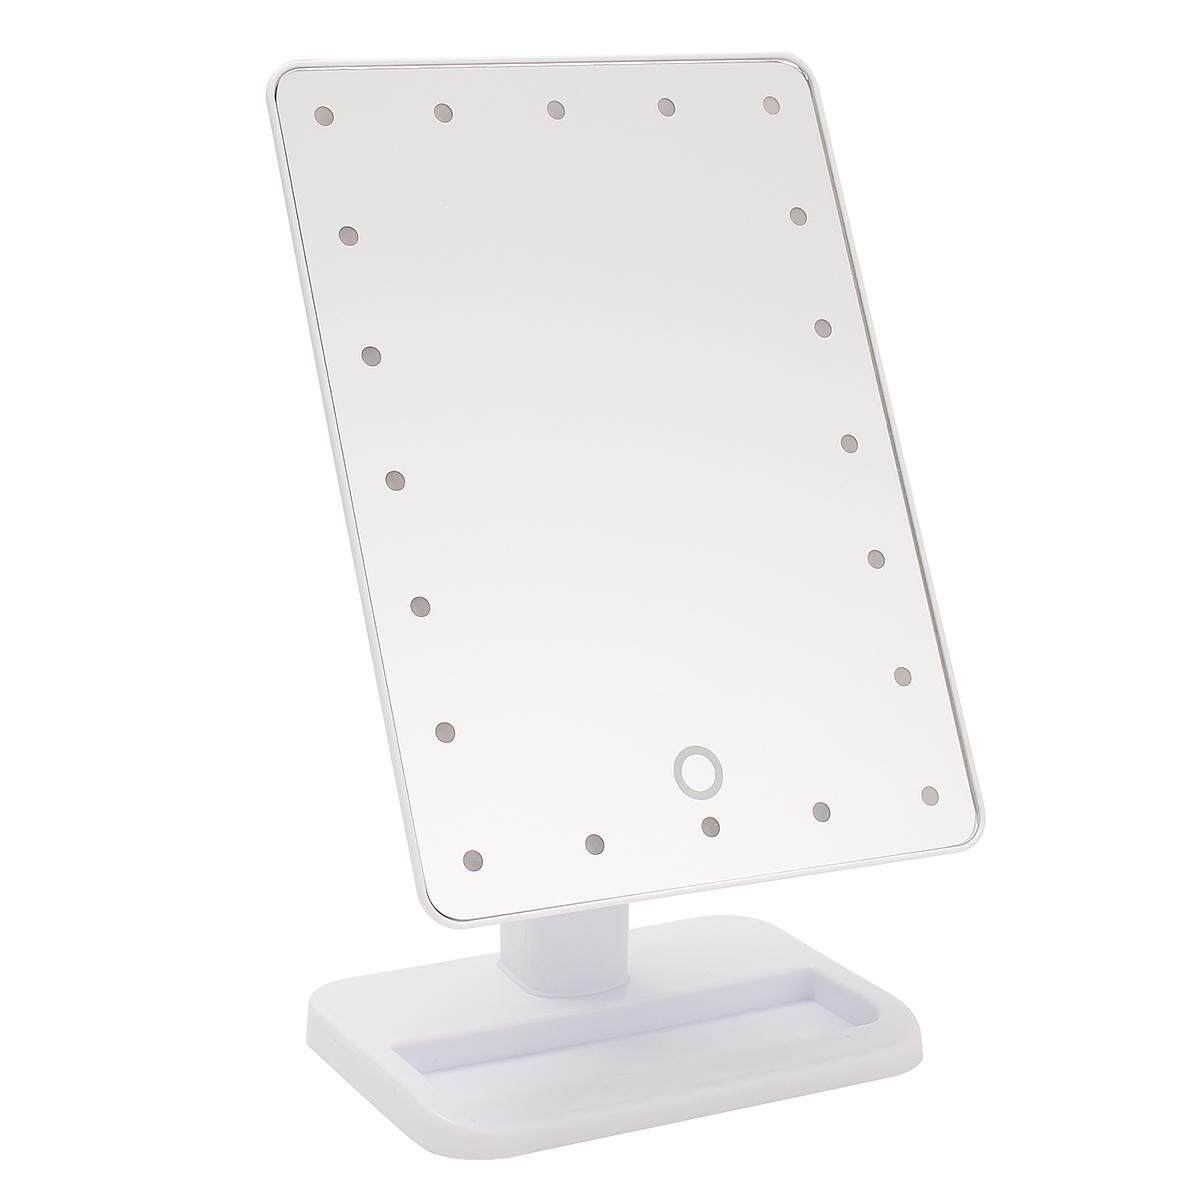 20 LEDs Touch Light Illuminated Make Up Cosmetic Bathroom Shaving Vanity Mirror White - intl